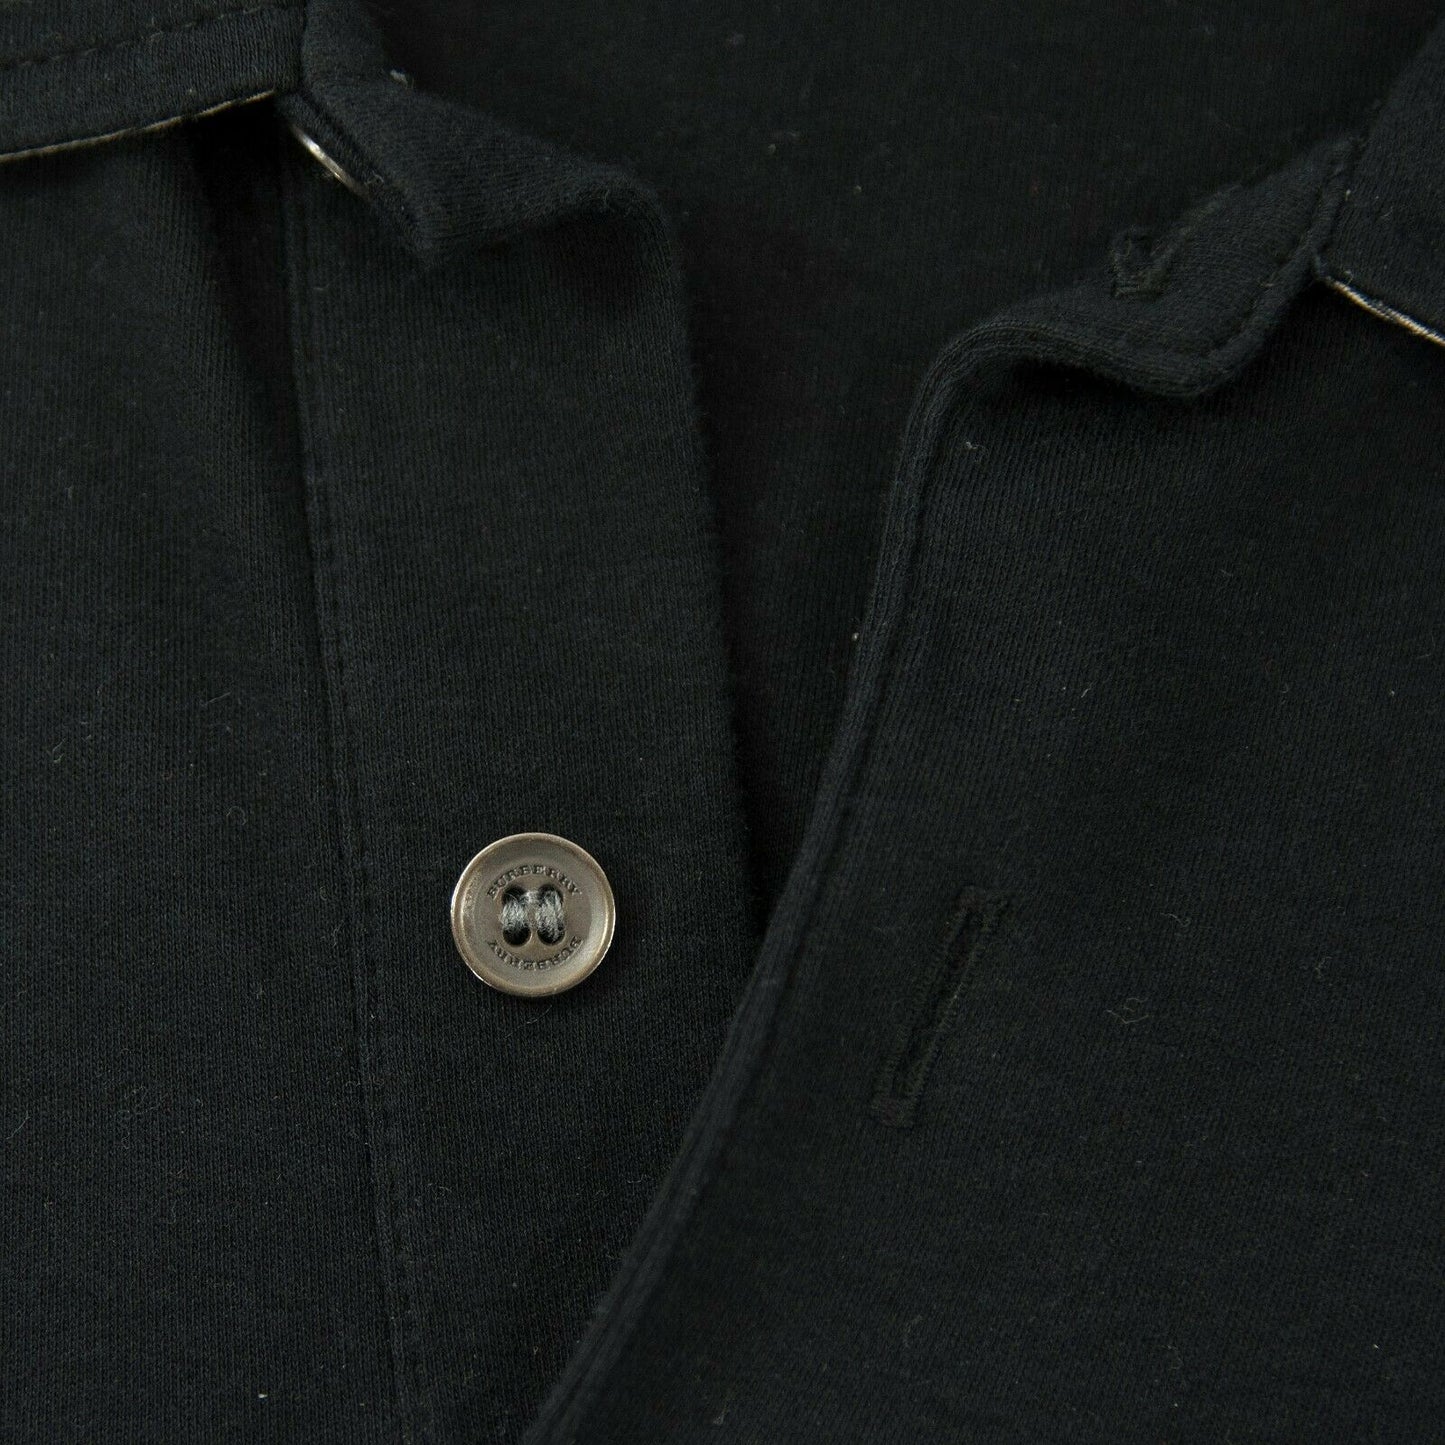 Burberry Black Knit Polo Cotton Shirt XL EUC